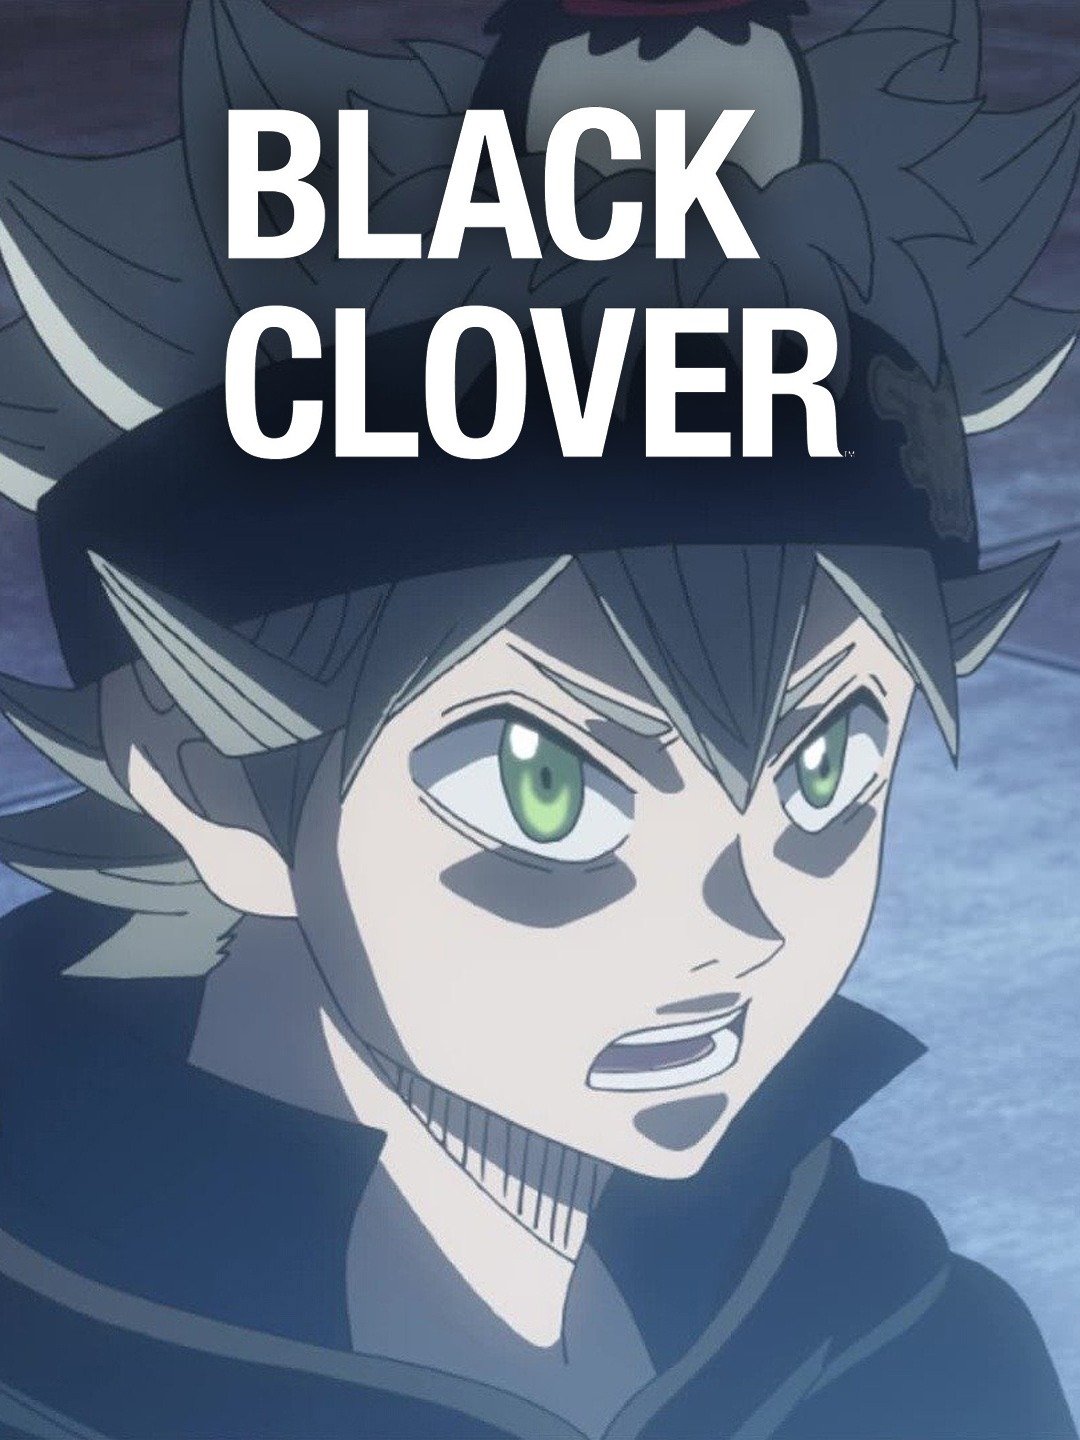 Black Clover Season 5 Release Date, Cast, Plot, Trailer and More!